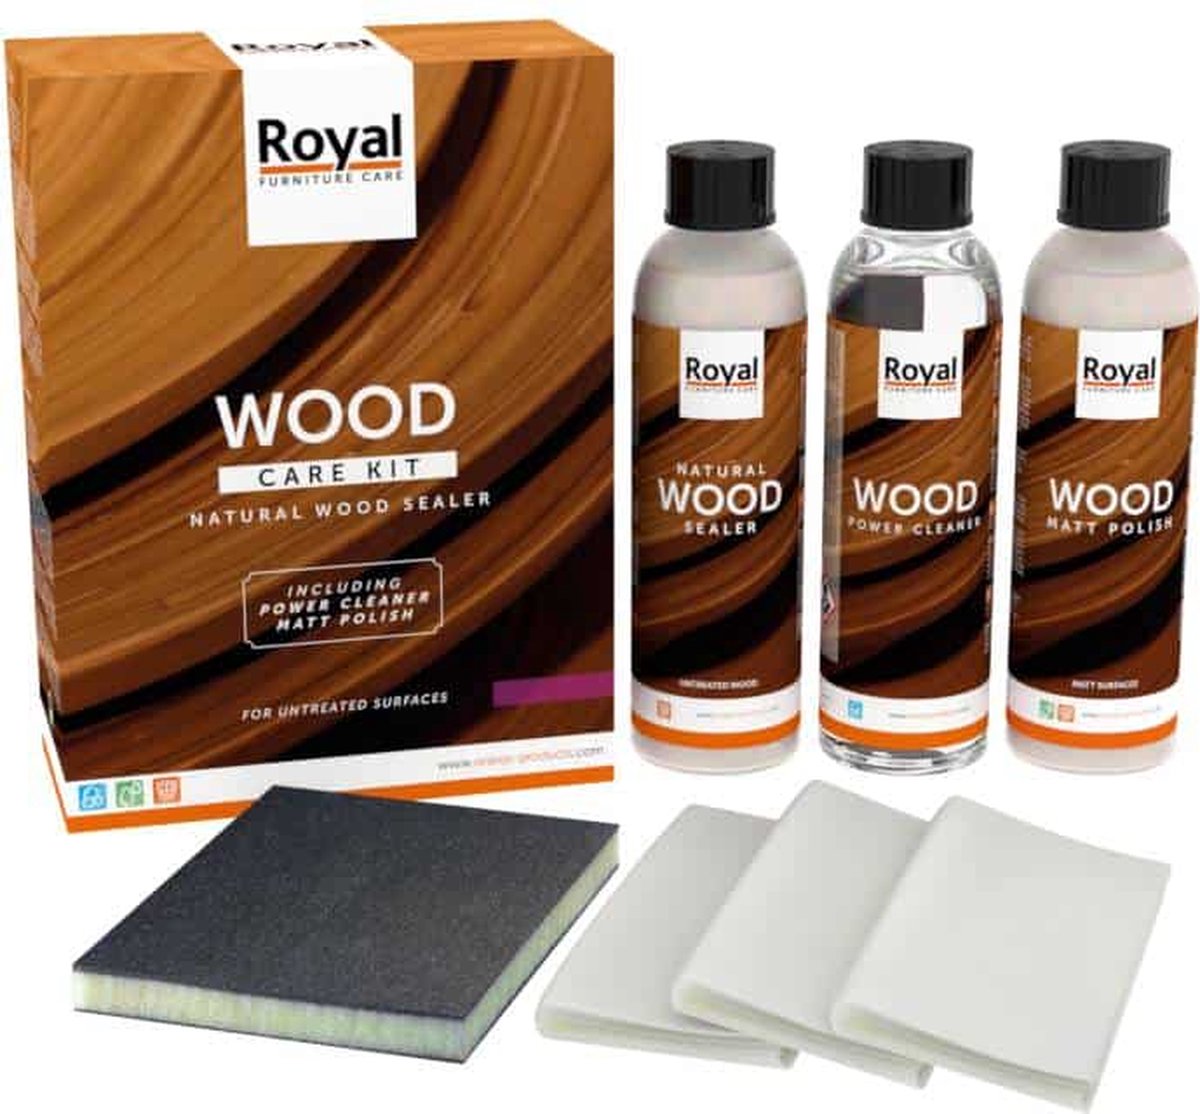 Natural Wood Sealer - Wood Care Kit | Natuurlijke hout beschermer en onderhoud set - royal furniture care